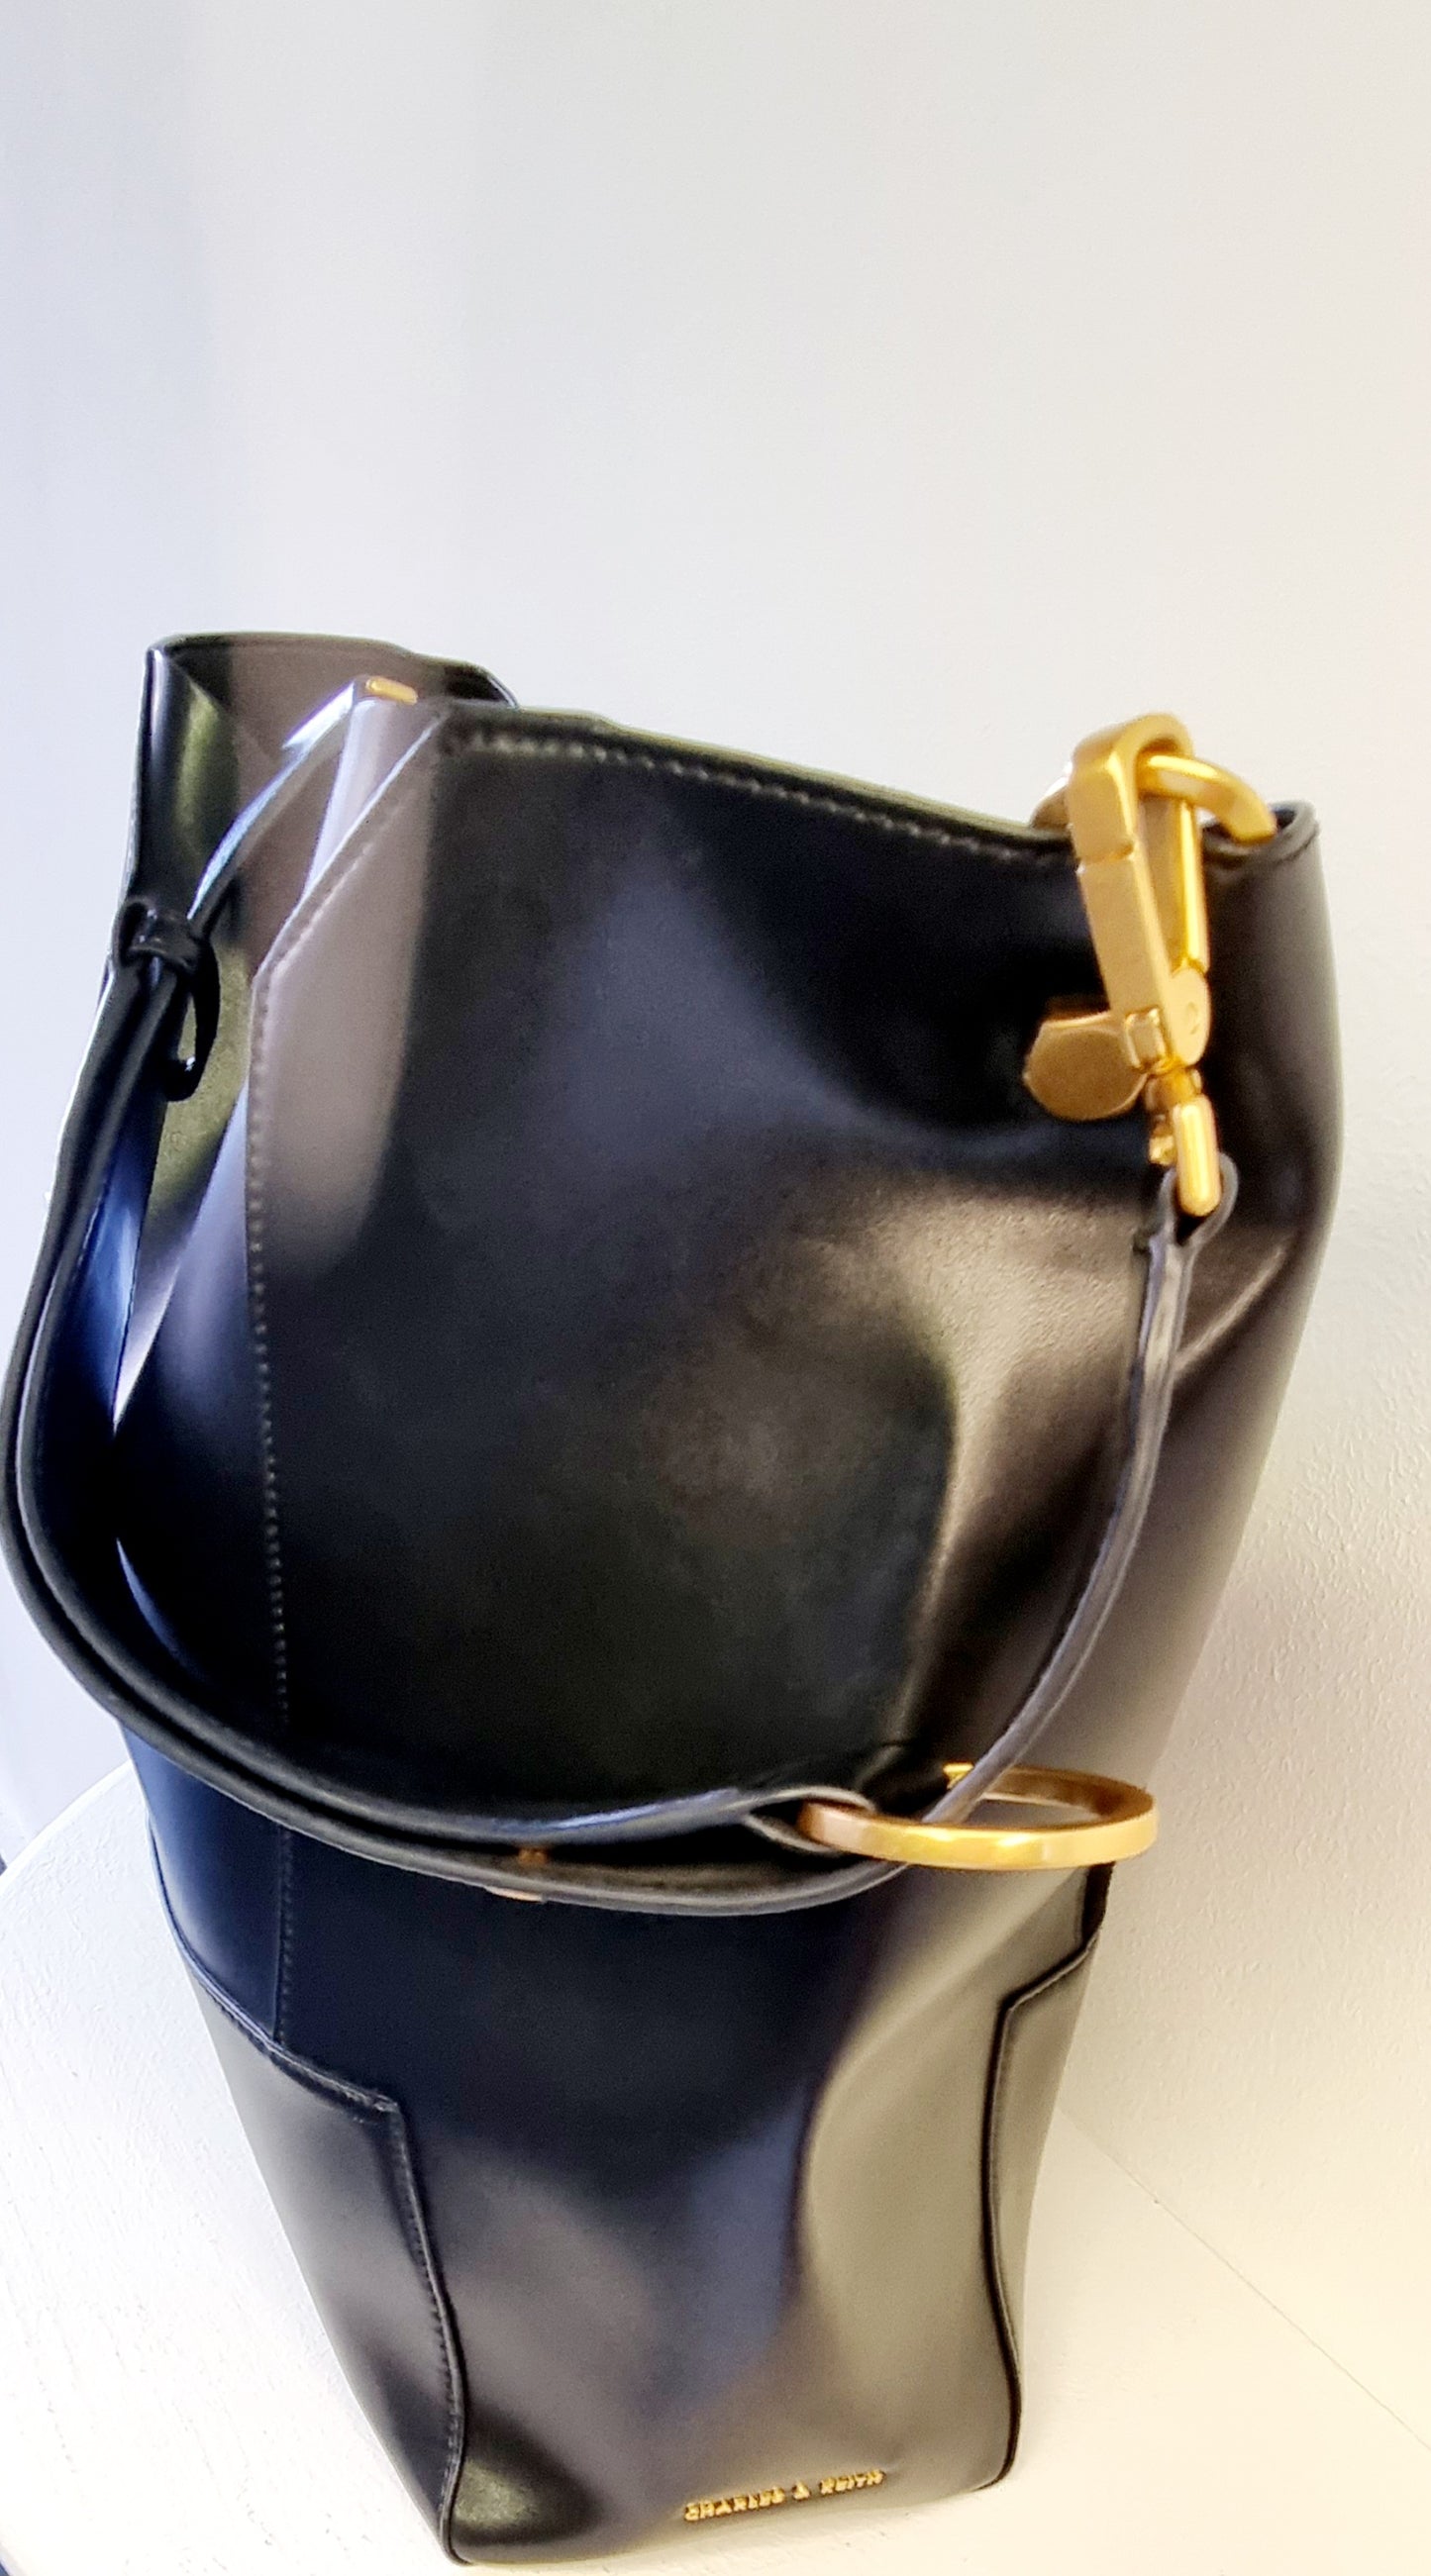 Charles & Kieth - Single strap black shoulder bag